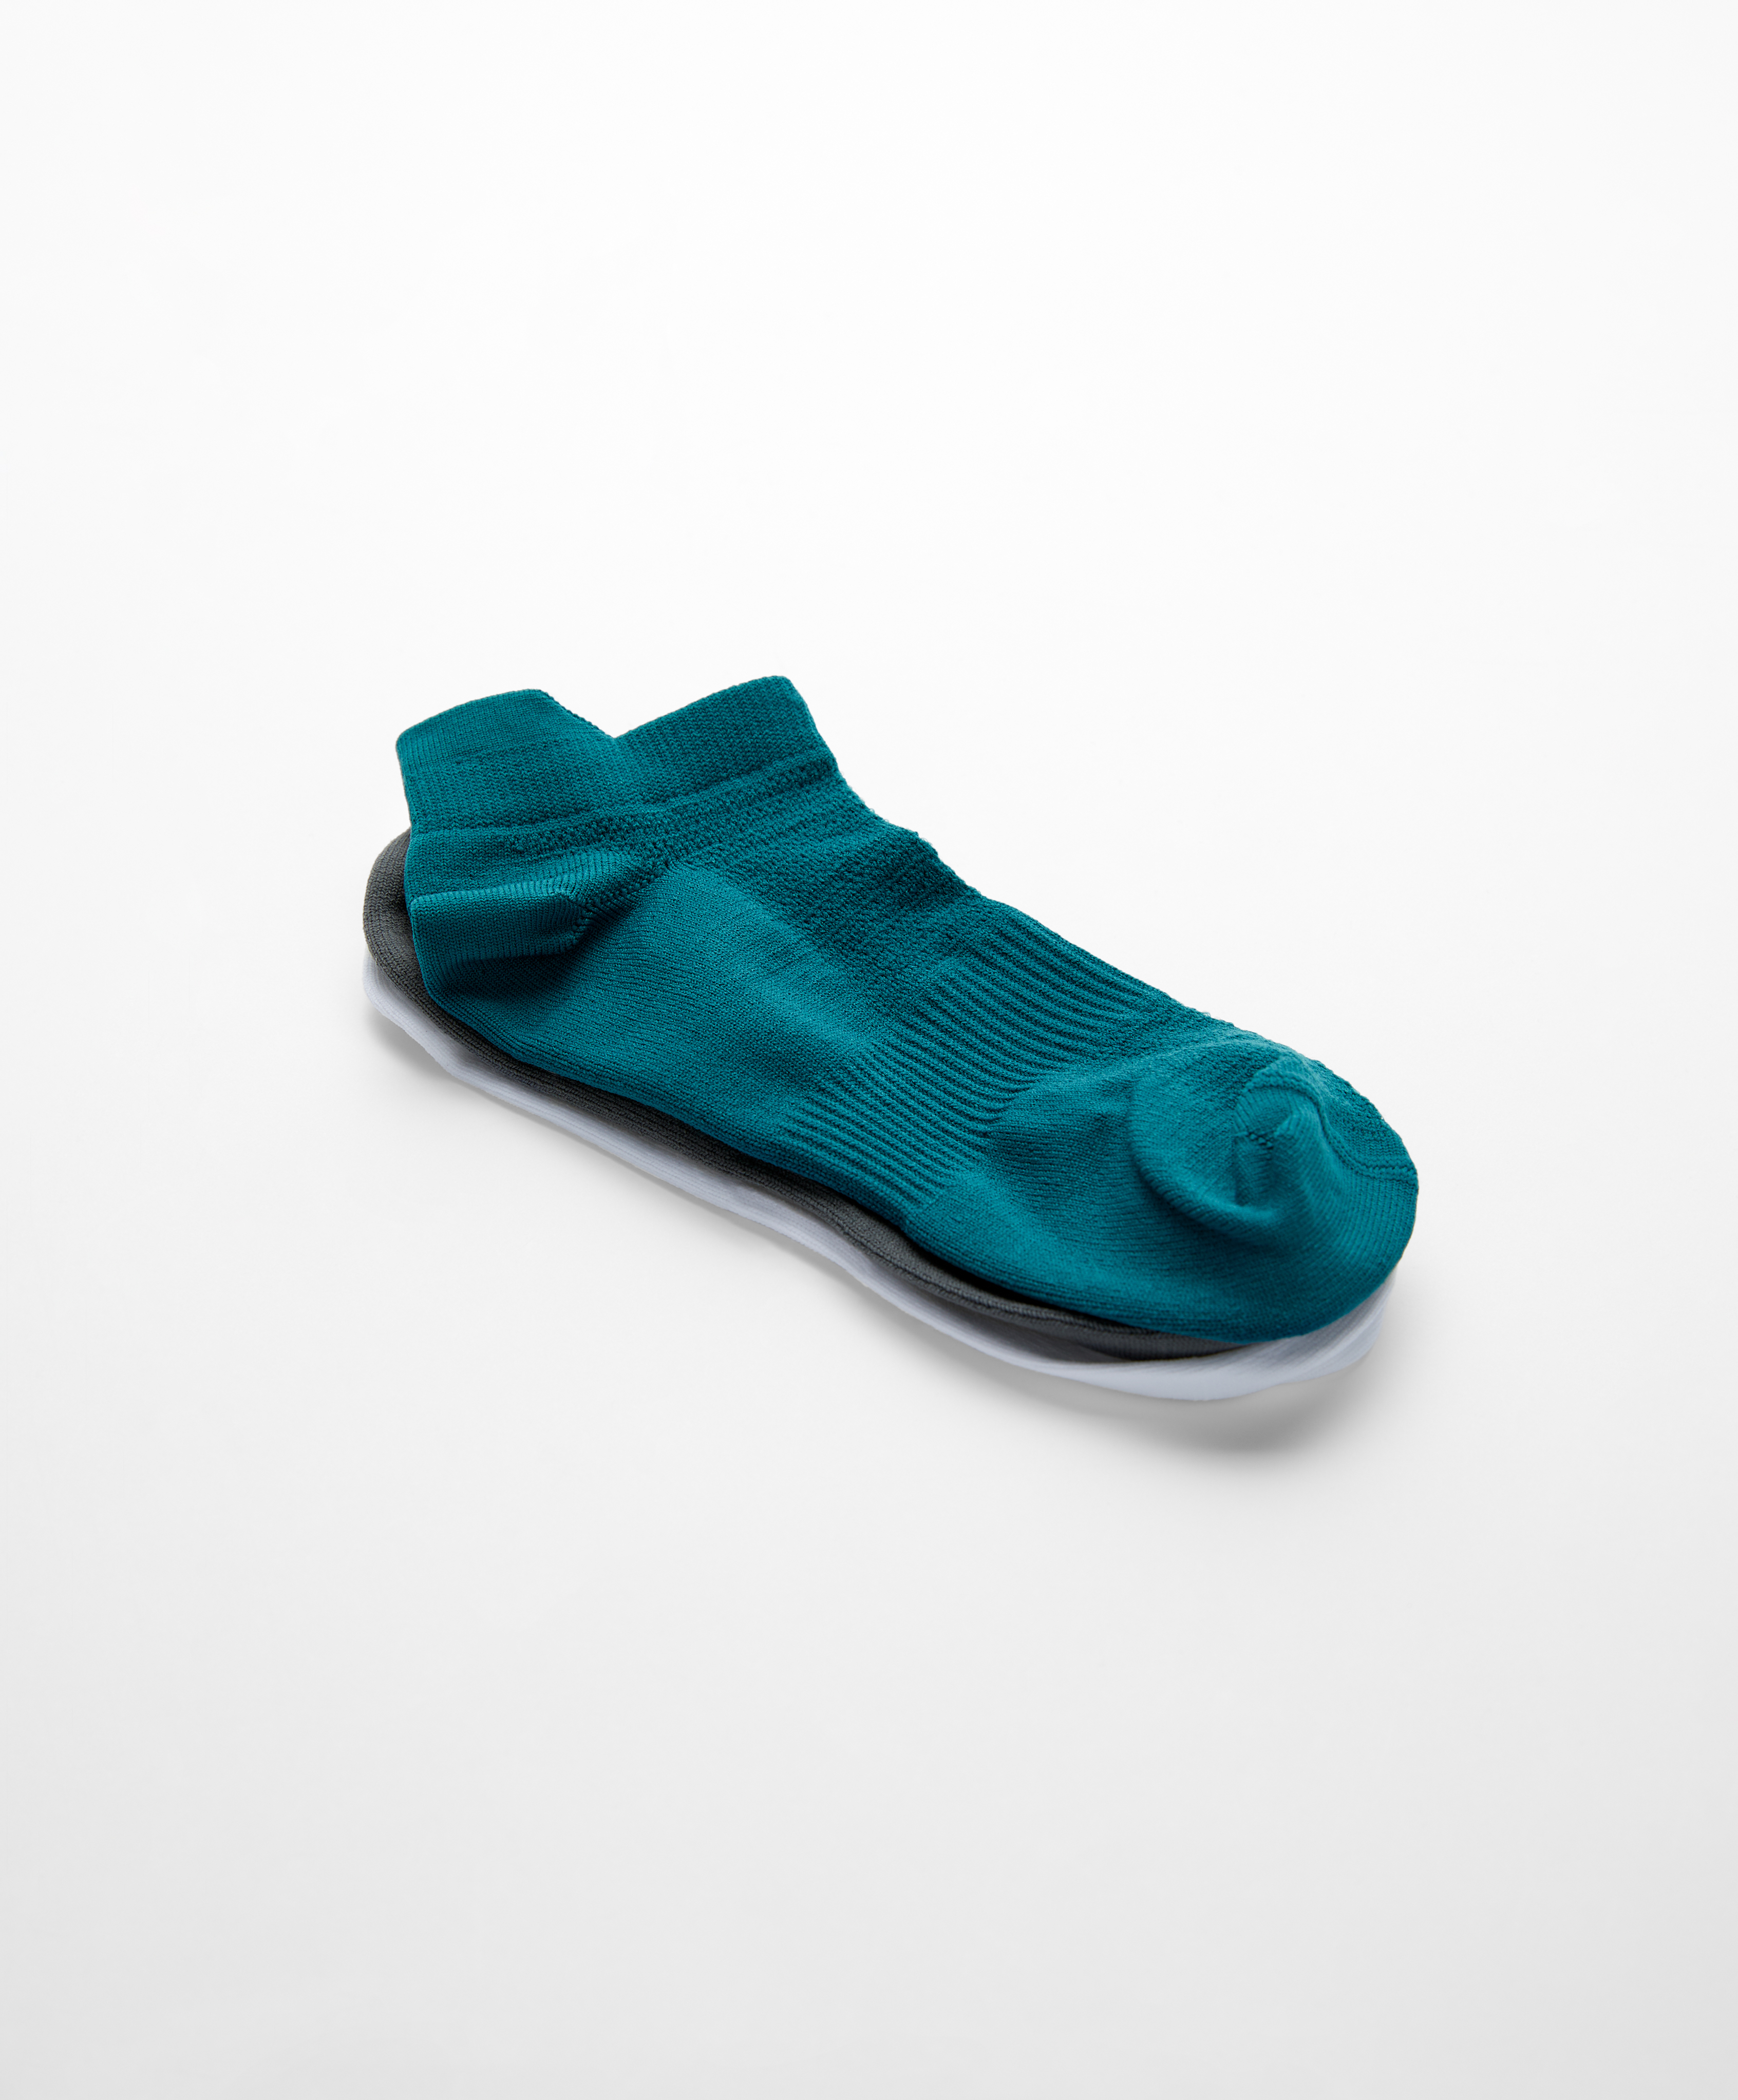 3 pairs of polyamide sports sneaker socks